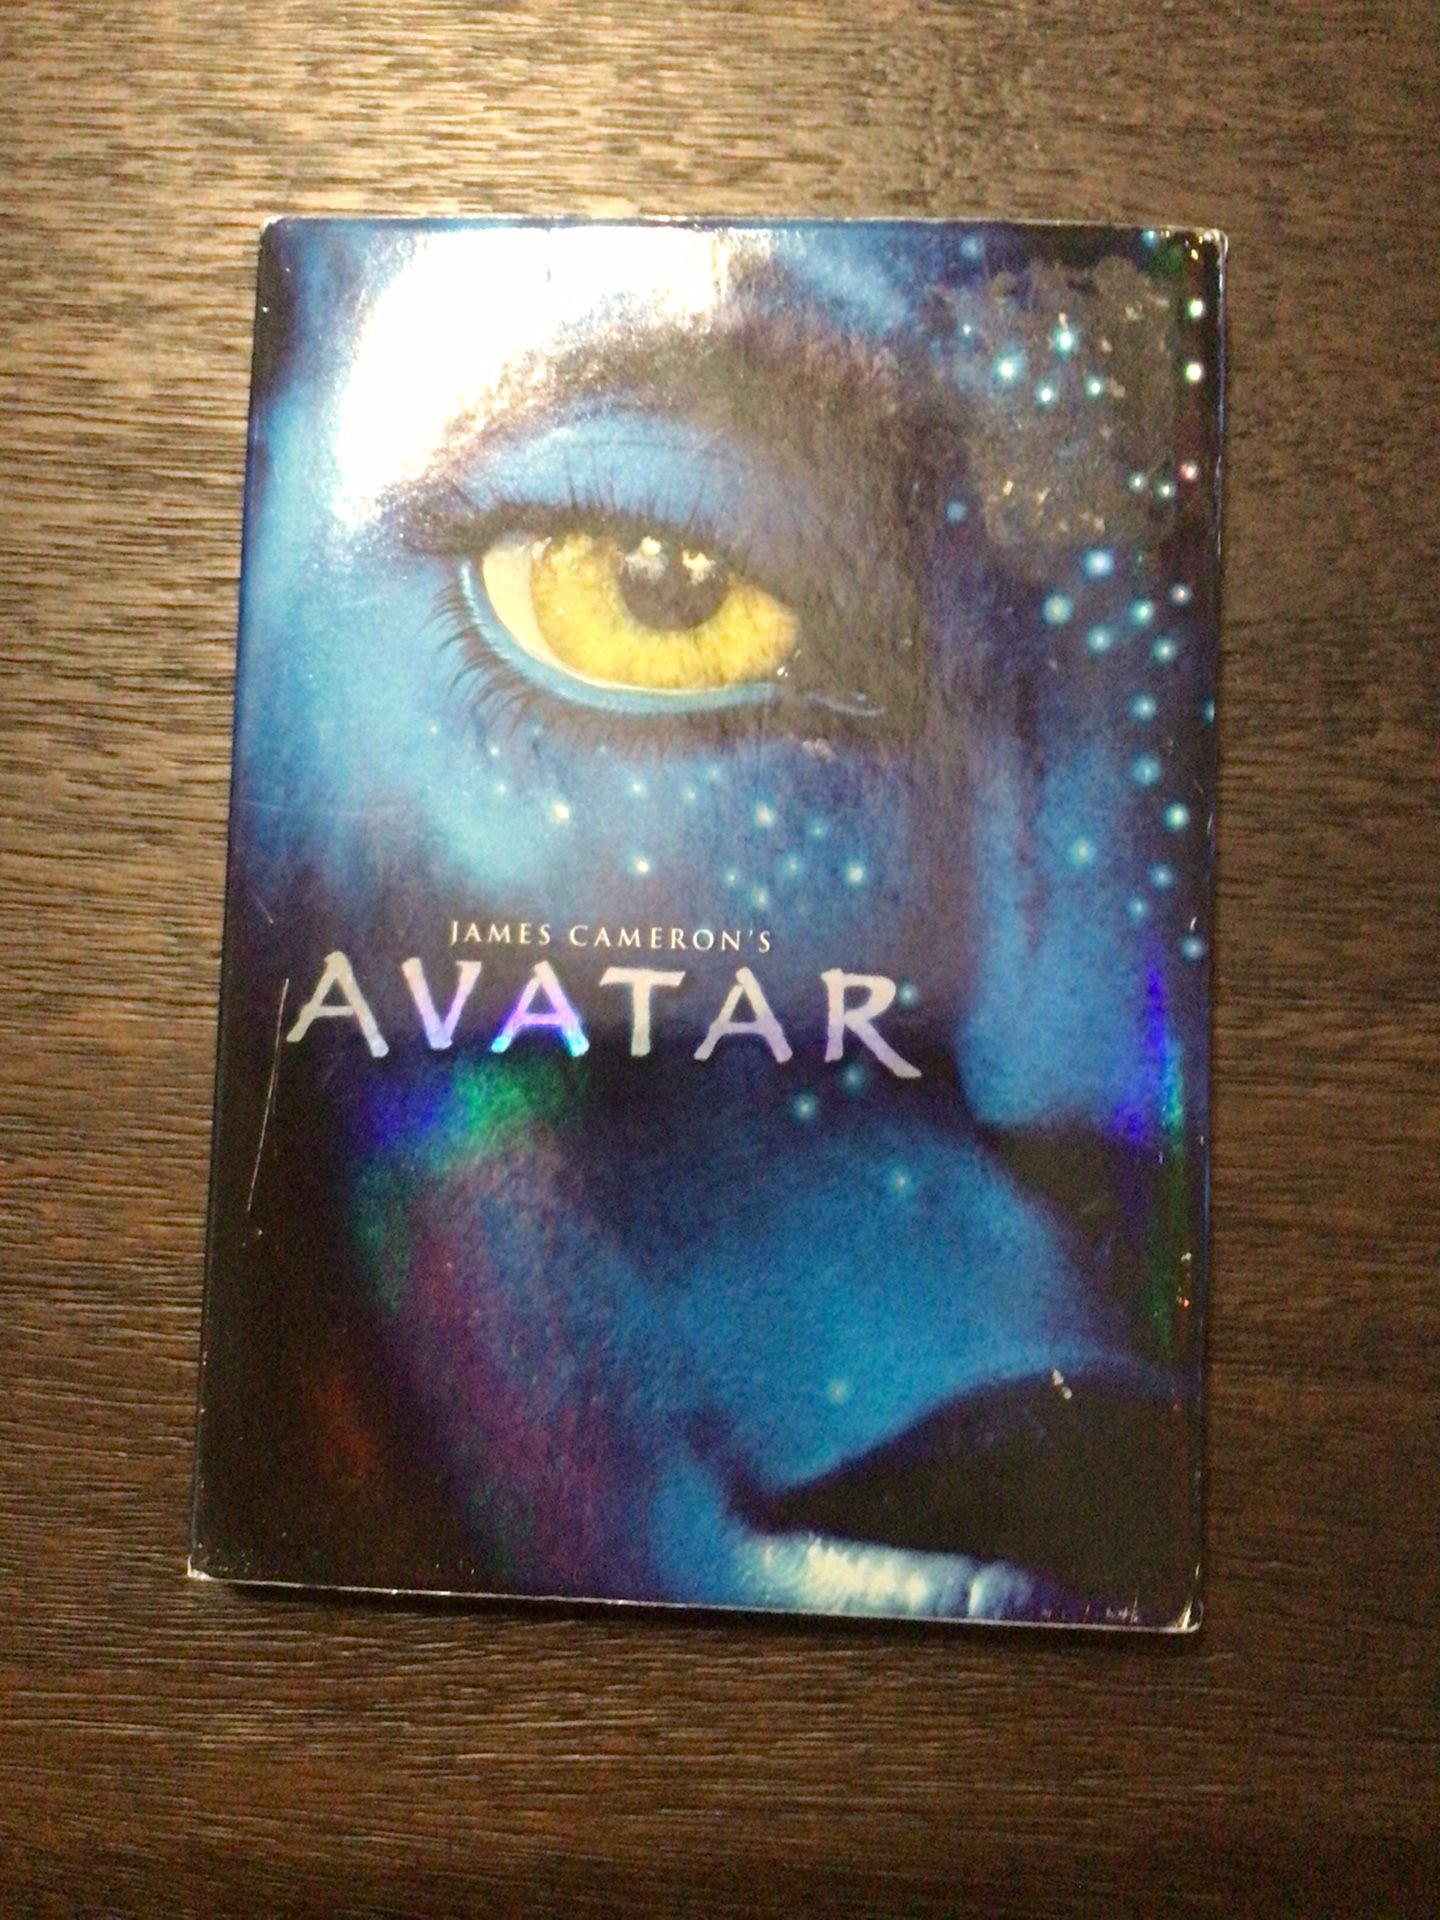   Movie  Dvd  Avatar return to Pandora $15